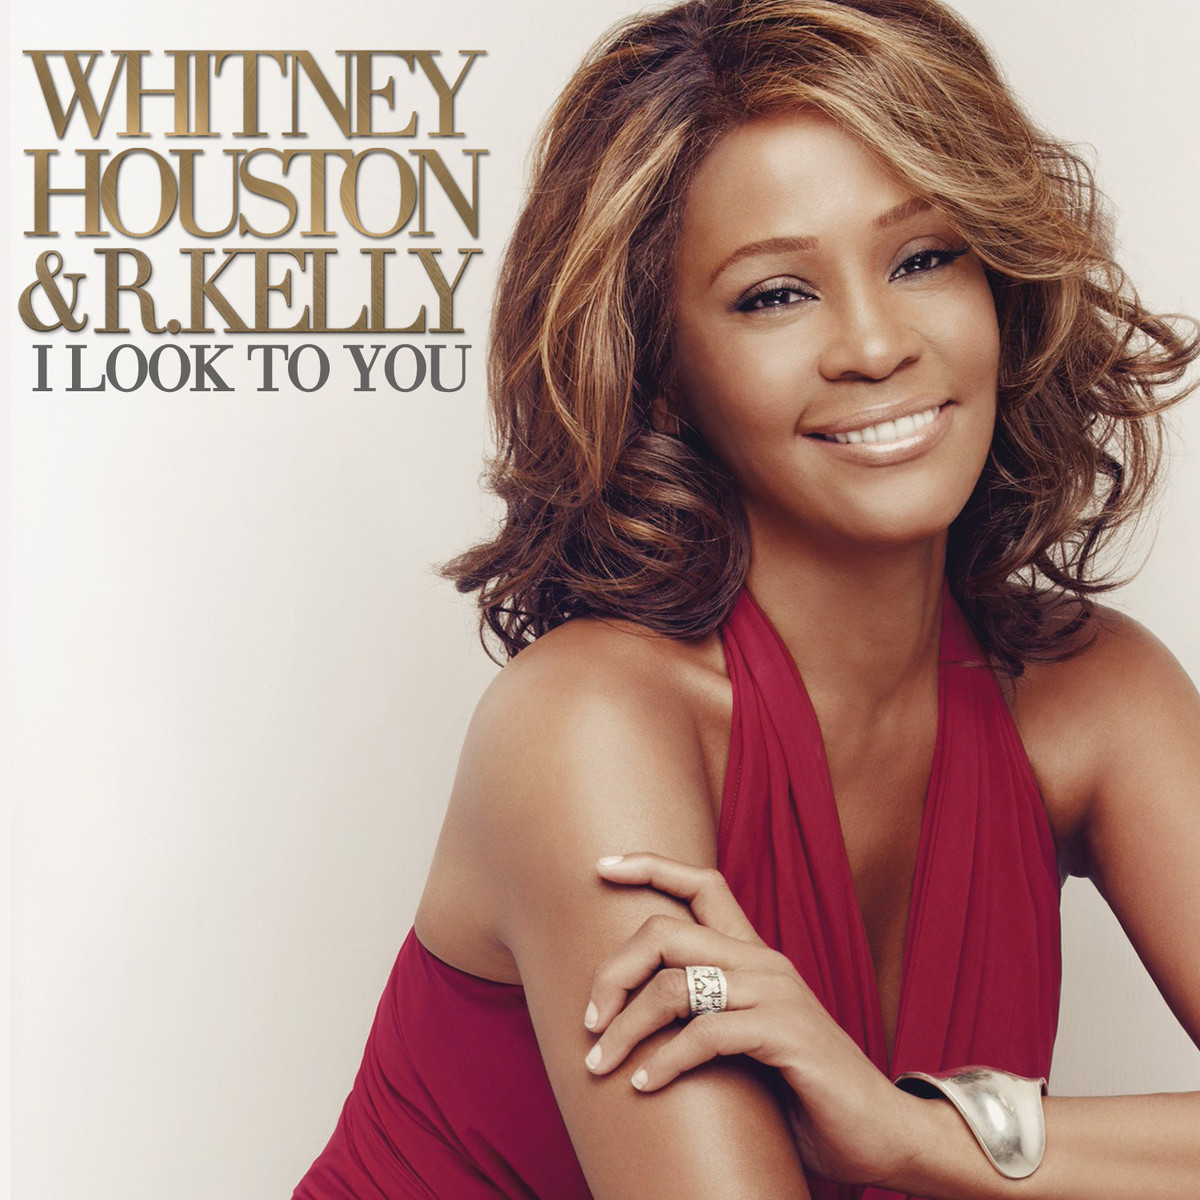 http://2.bp.blogspot.com/-lavsxHCzgNU/UGHgfhCuomI/AAAAAAAAFbA/a1COxVMGc_c/s1600/Whitney-Houston-I-Look-to-You-feat.-R.-Kelly-2012.png